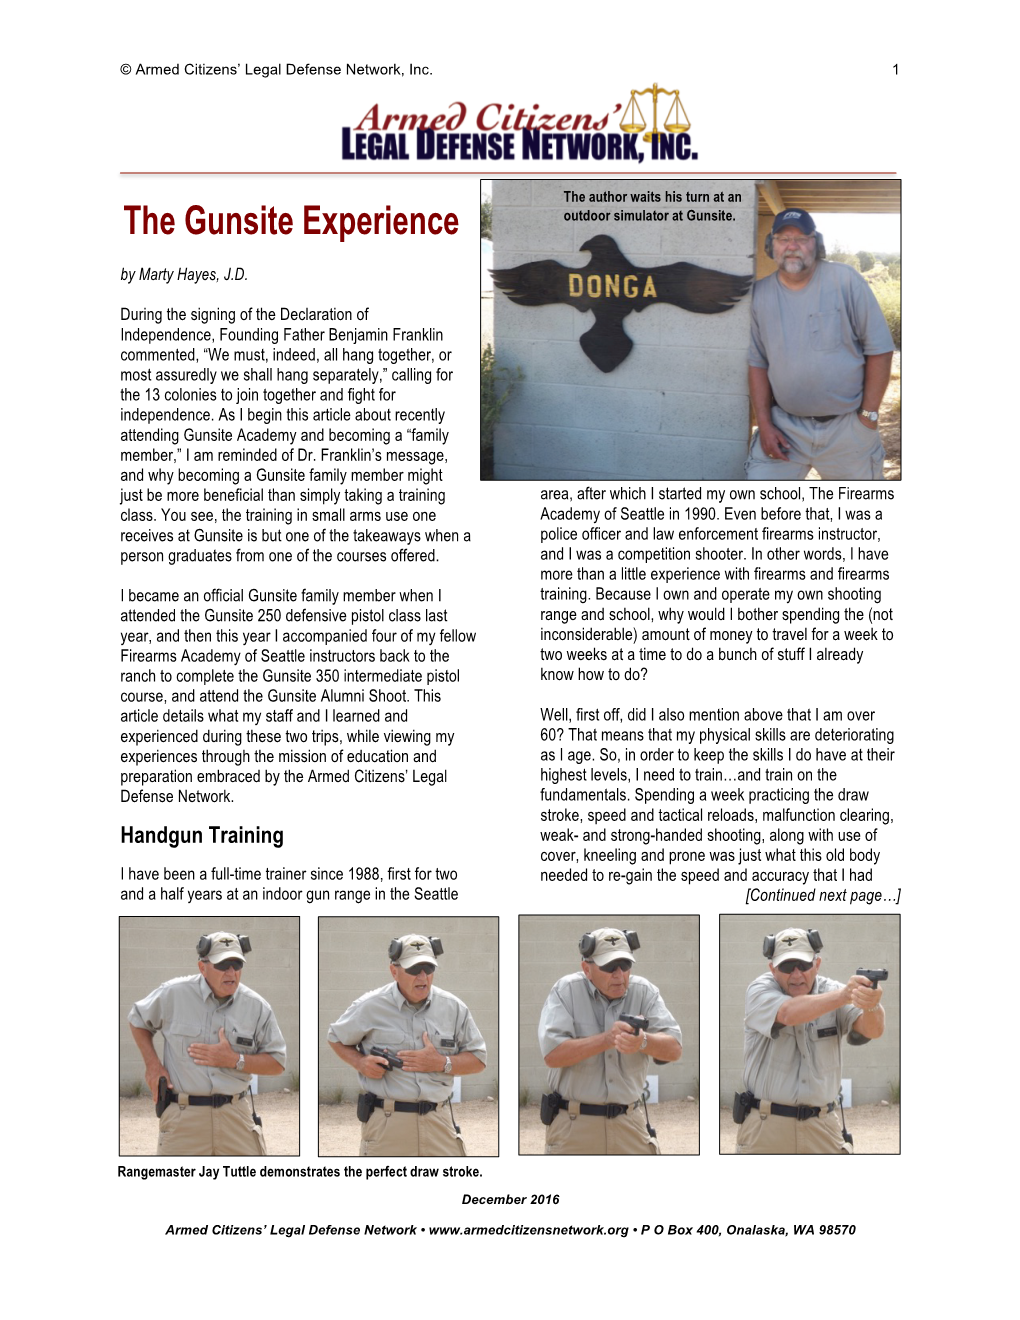 The Gunsite Experience Outdoor Simulator at Gunsite